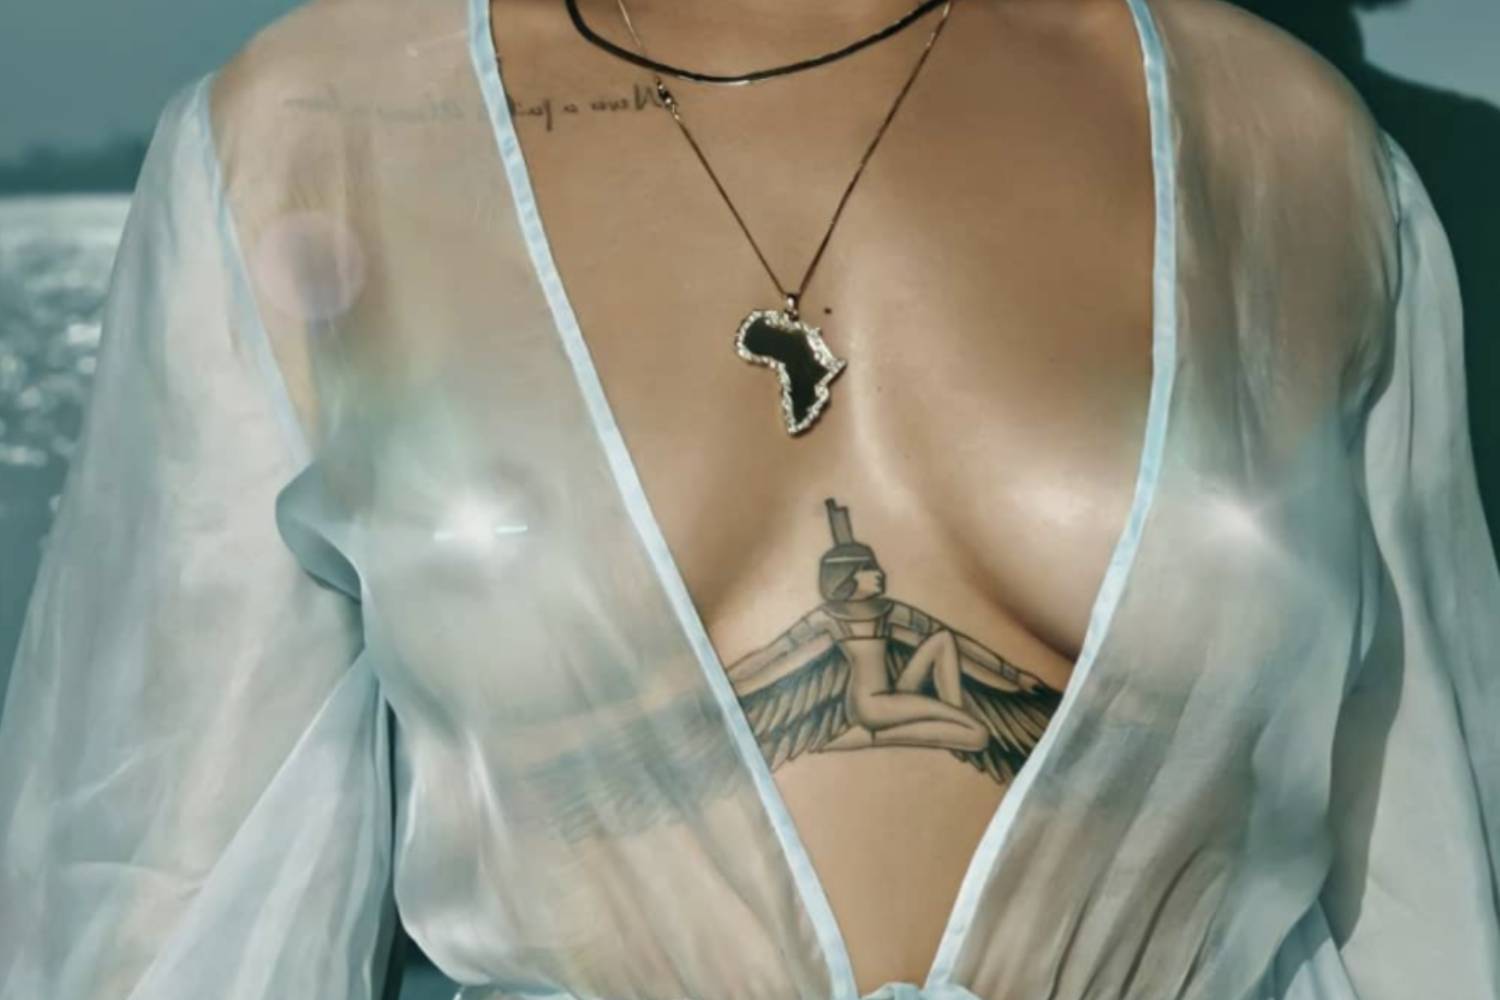 danilo belarmino recommends Extreme Female Nipple Piercing